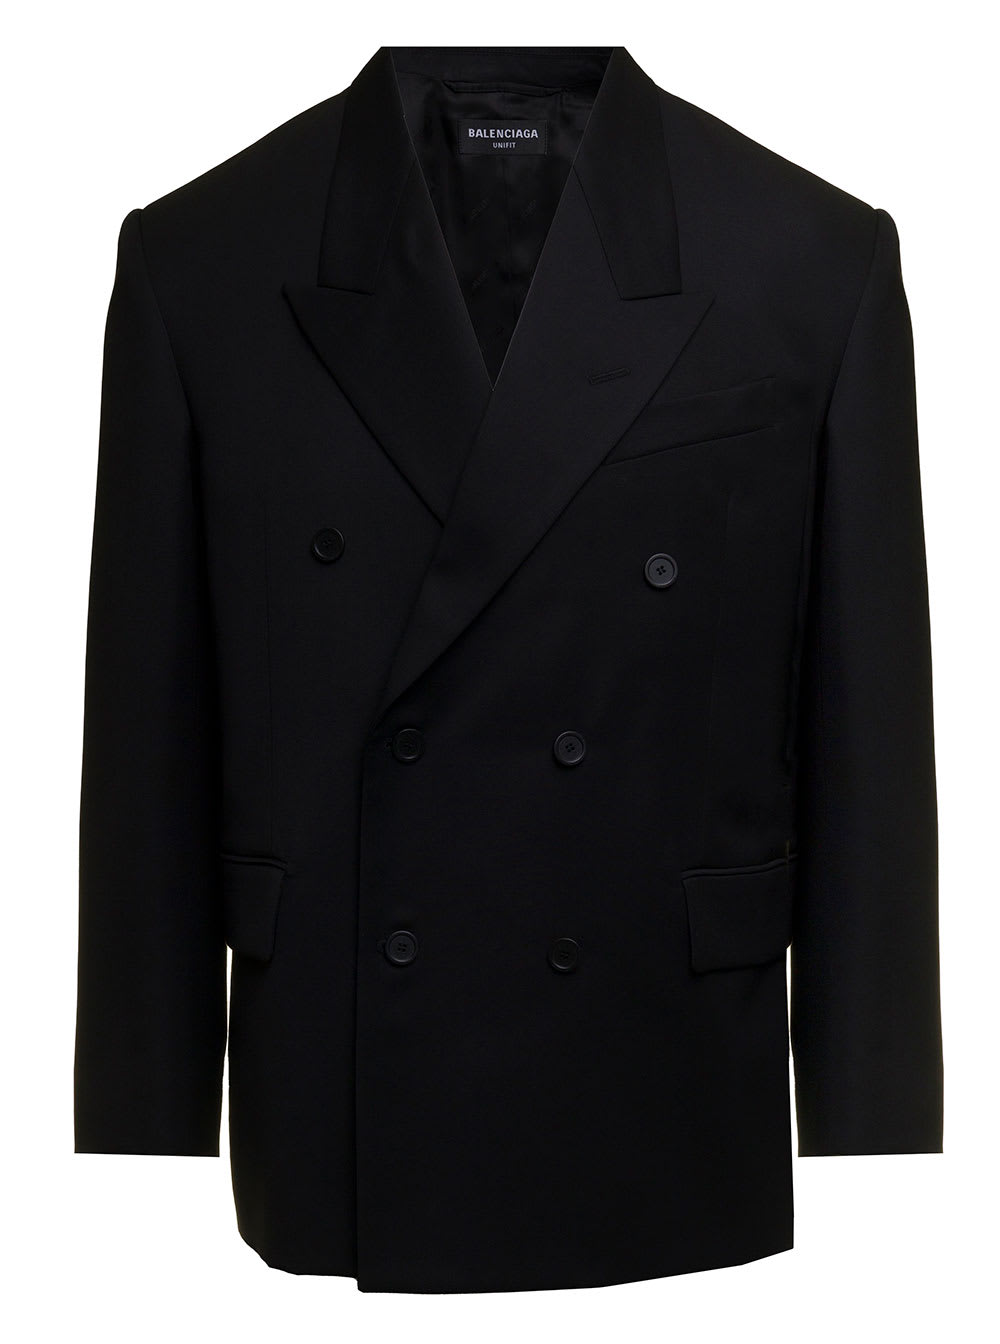 Balenciaga Mans Double-breasted Black Wool Jacket